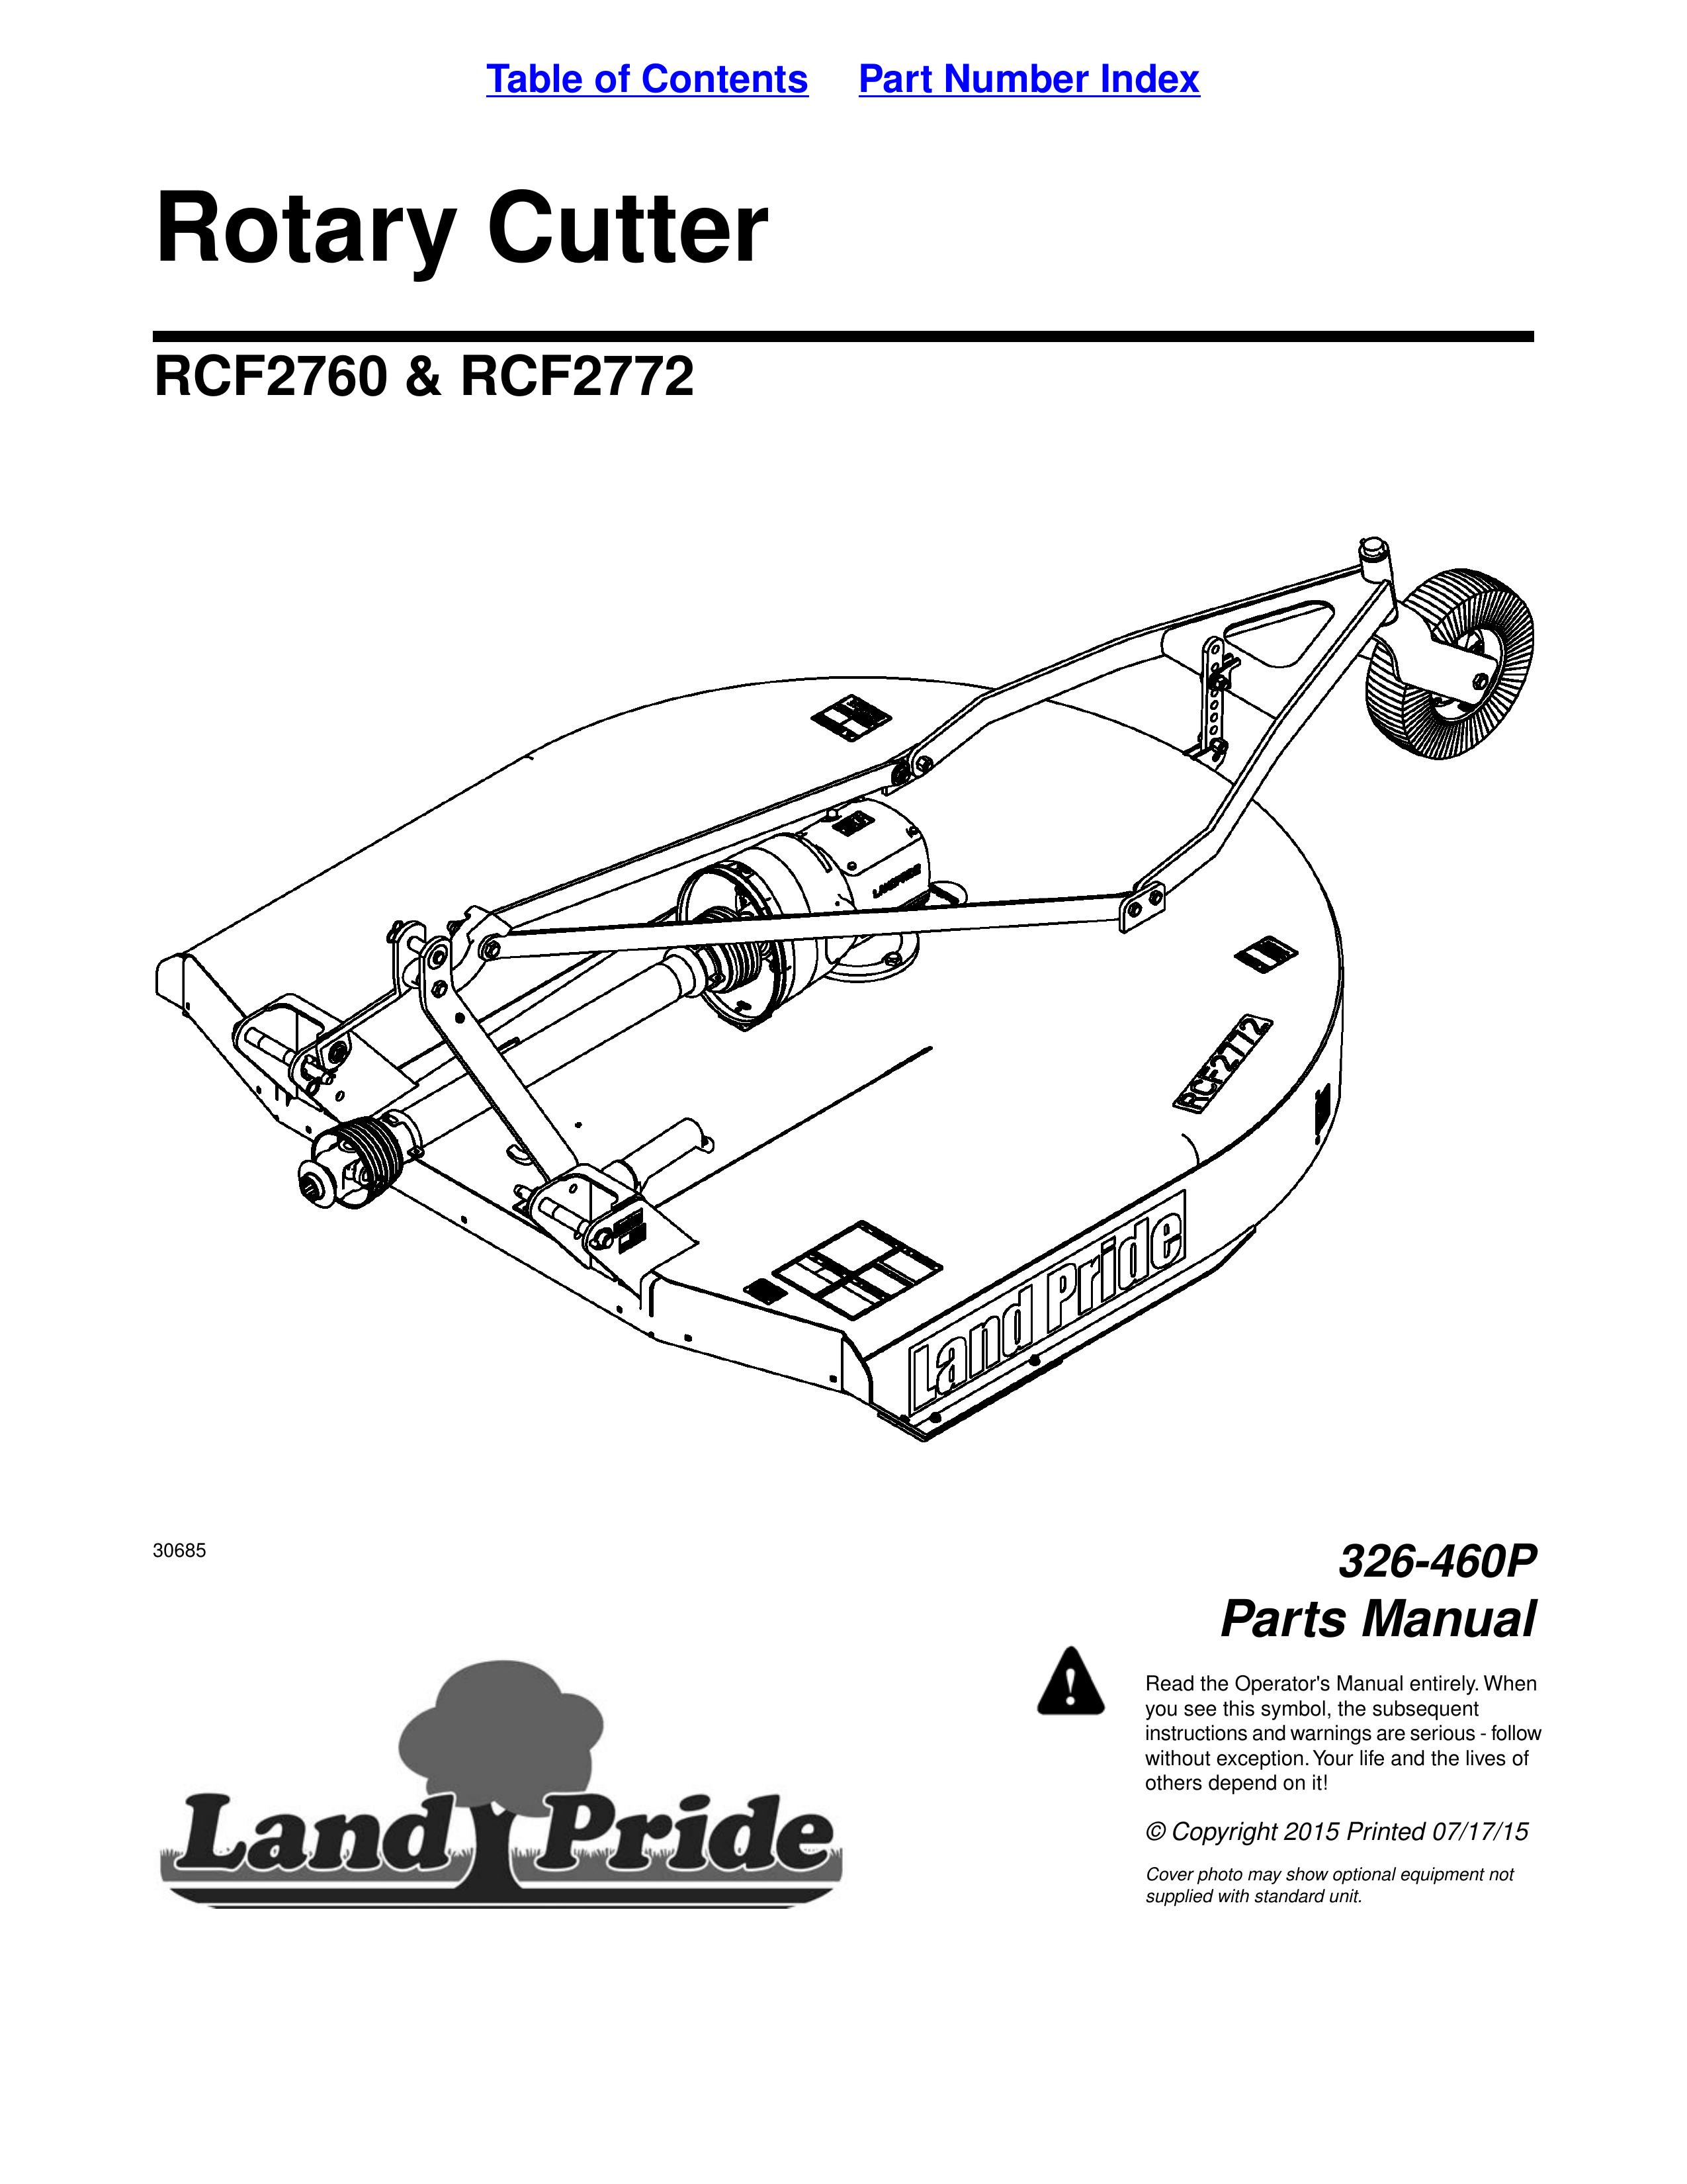 Land Pride rcf2760 Brush Cutter User Manual